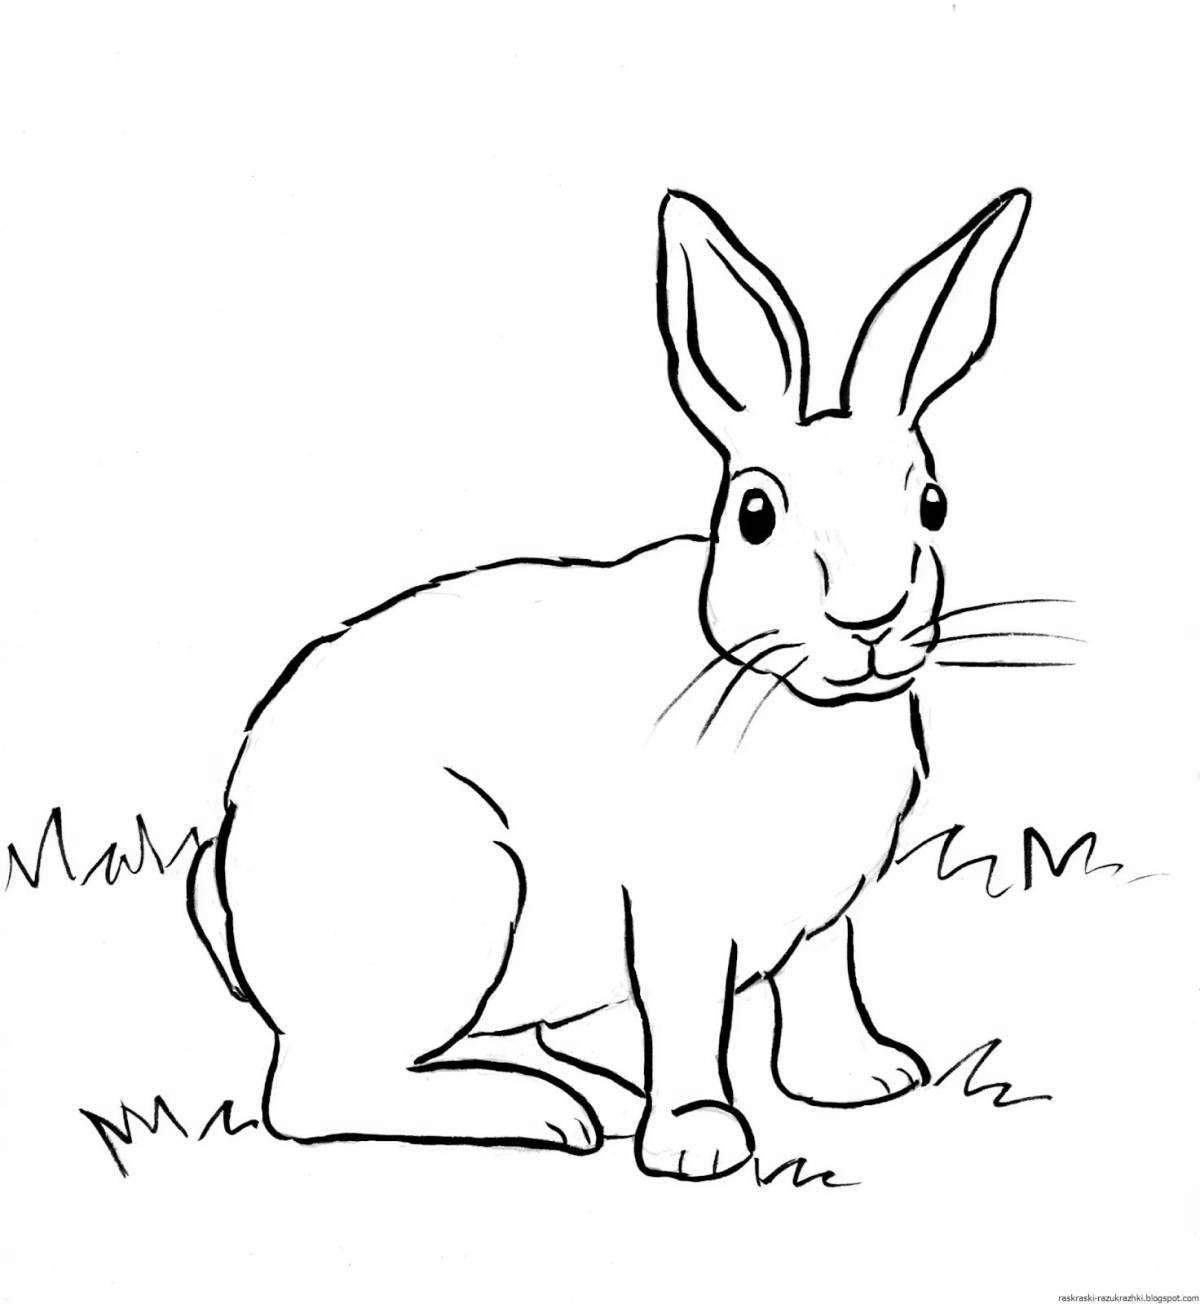 Cute rabbit coloring book for kids